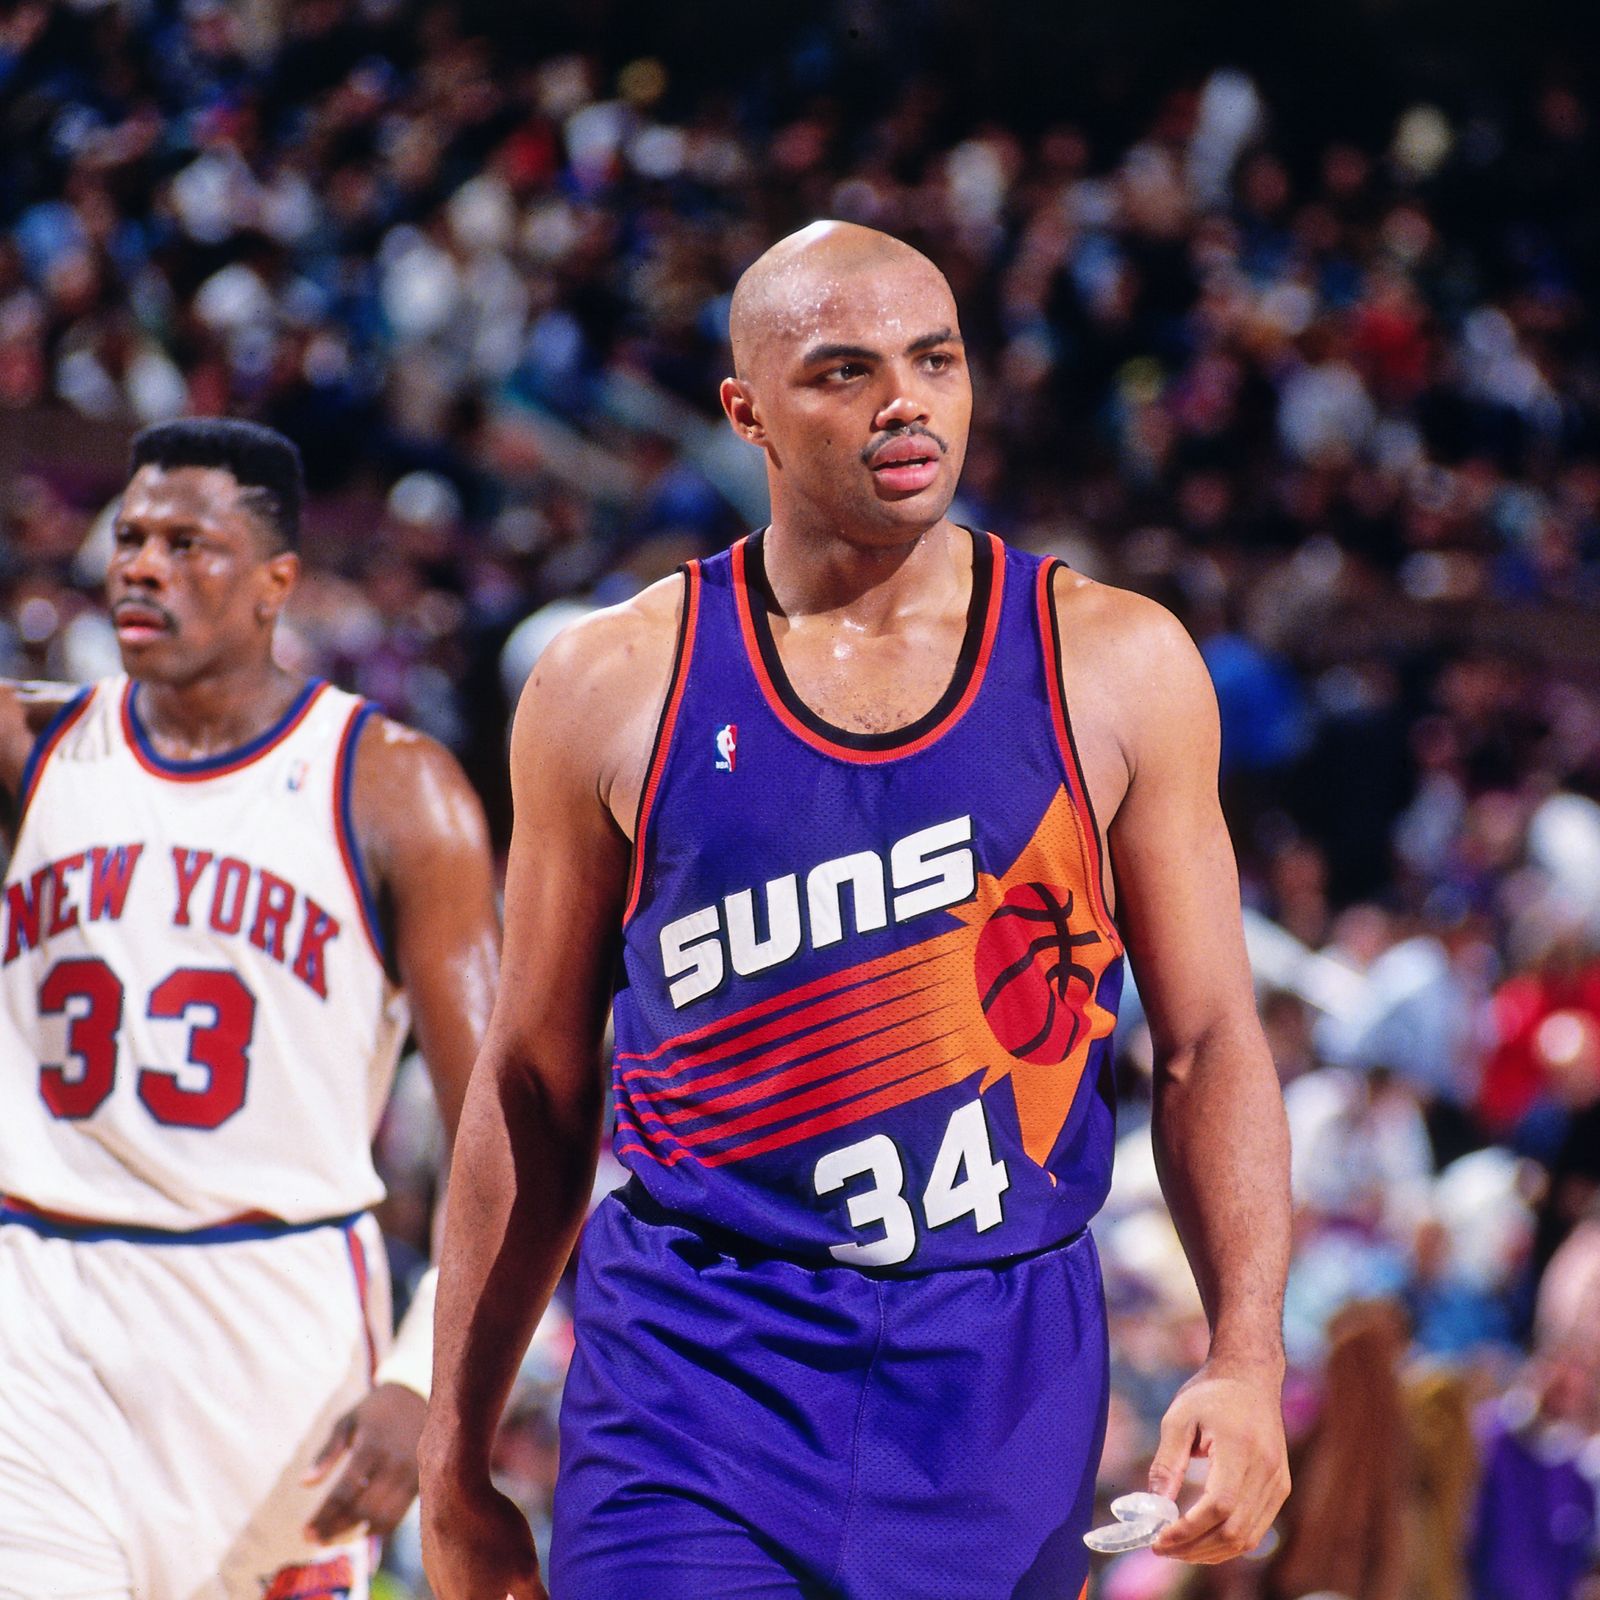 Phoenix Suns bring back classic uniforms inspired by '92-93 season